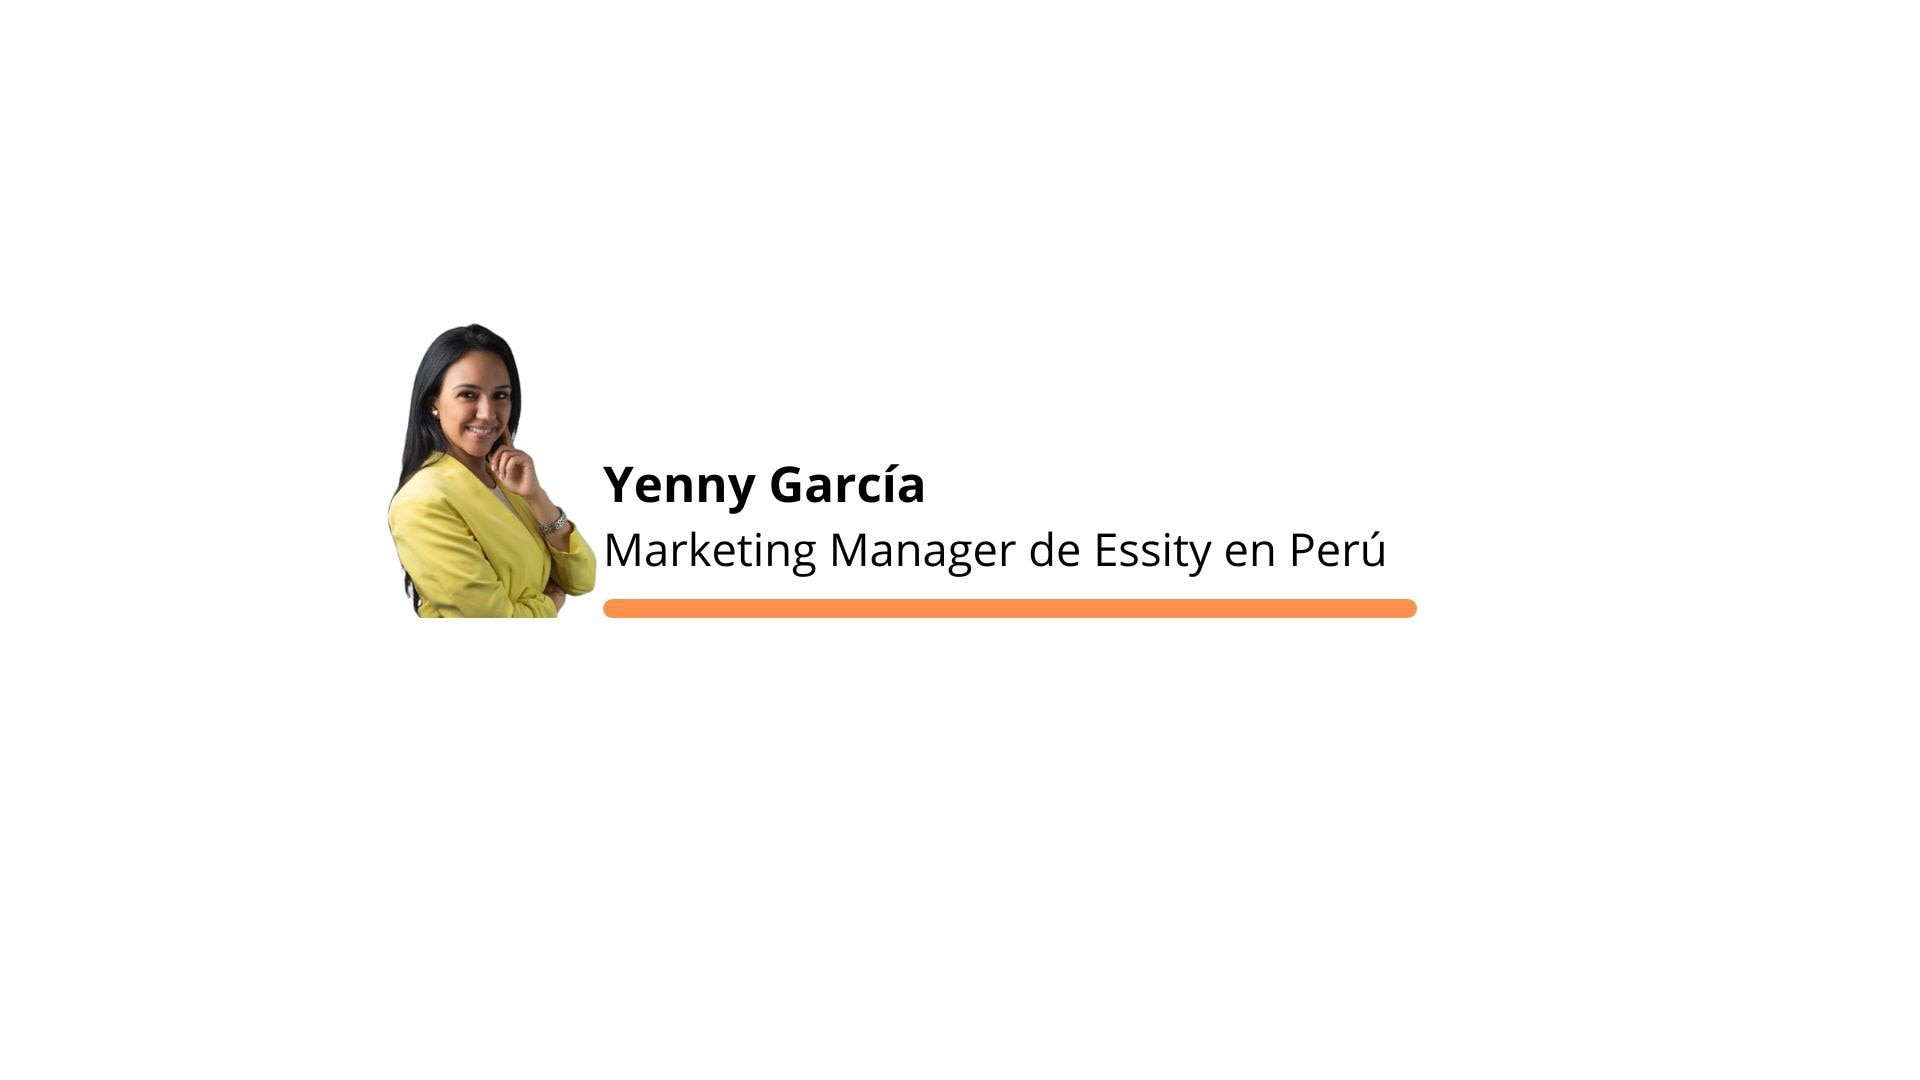 Yenny García